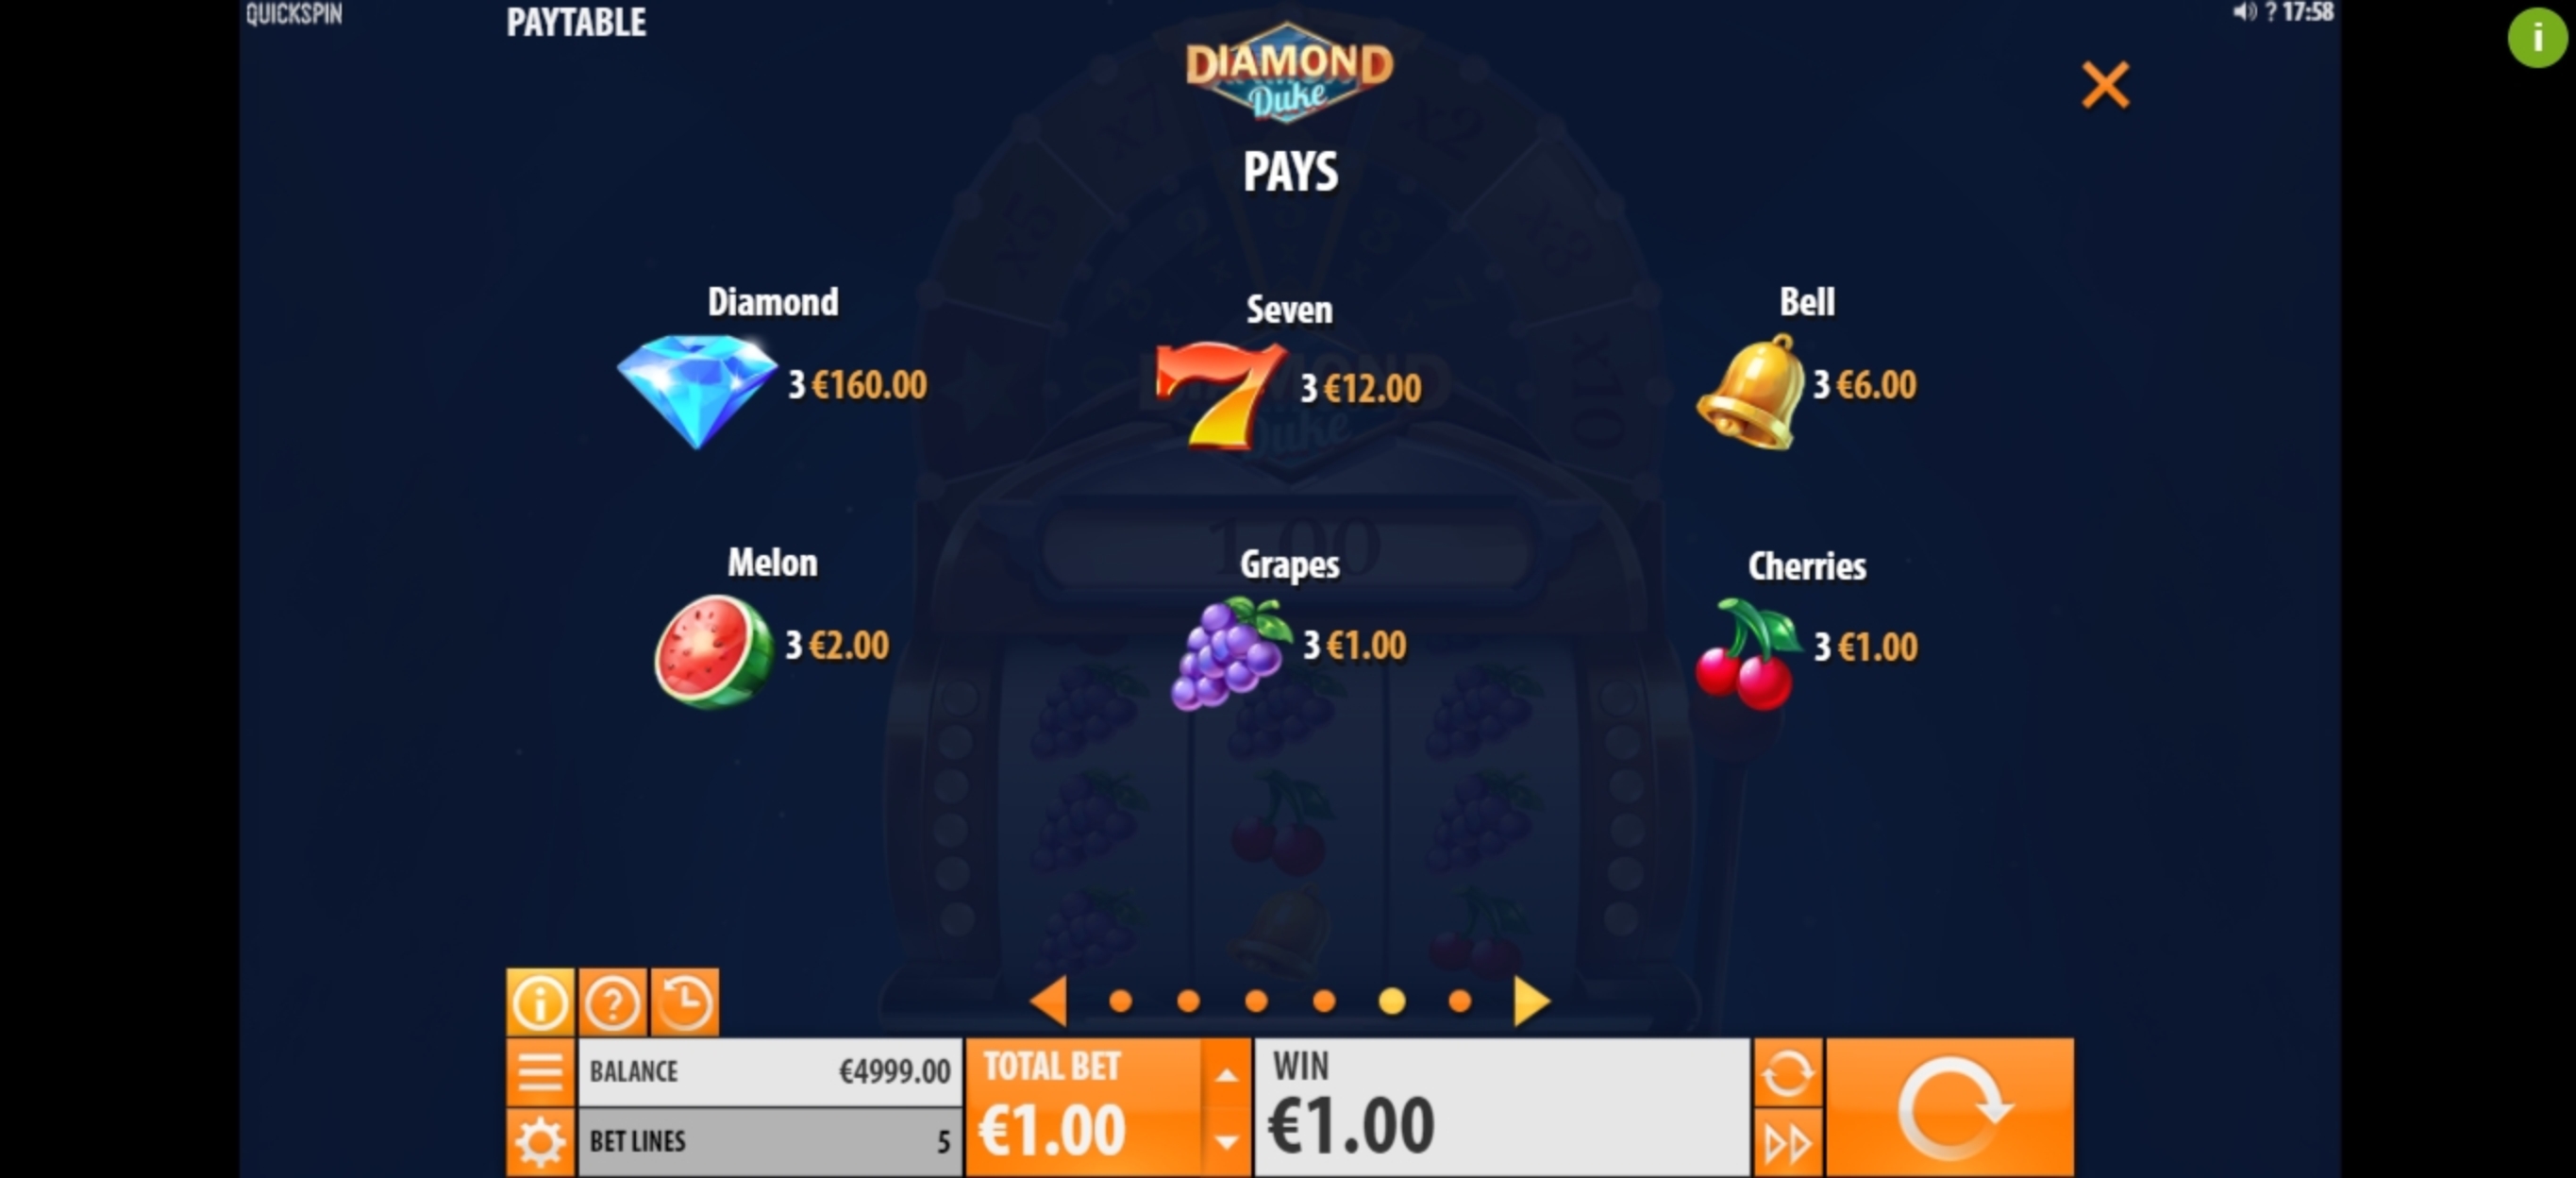 Info of Diamond Duke Slot Game by Quickspin